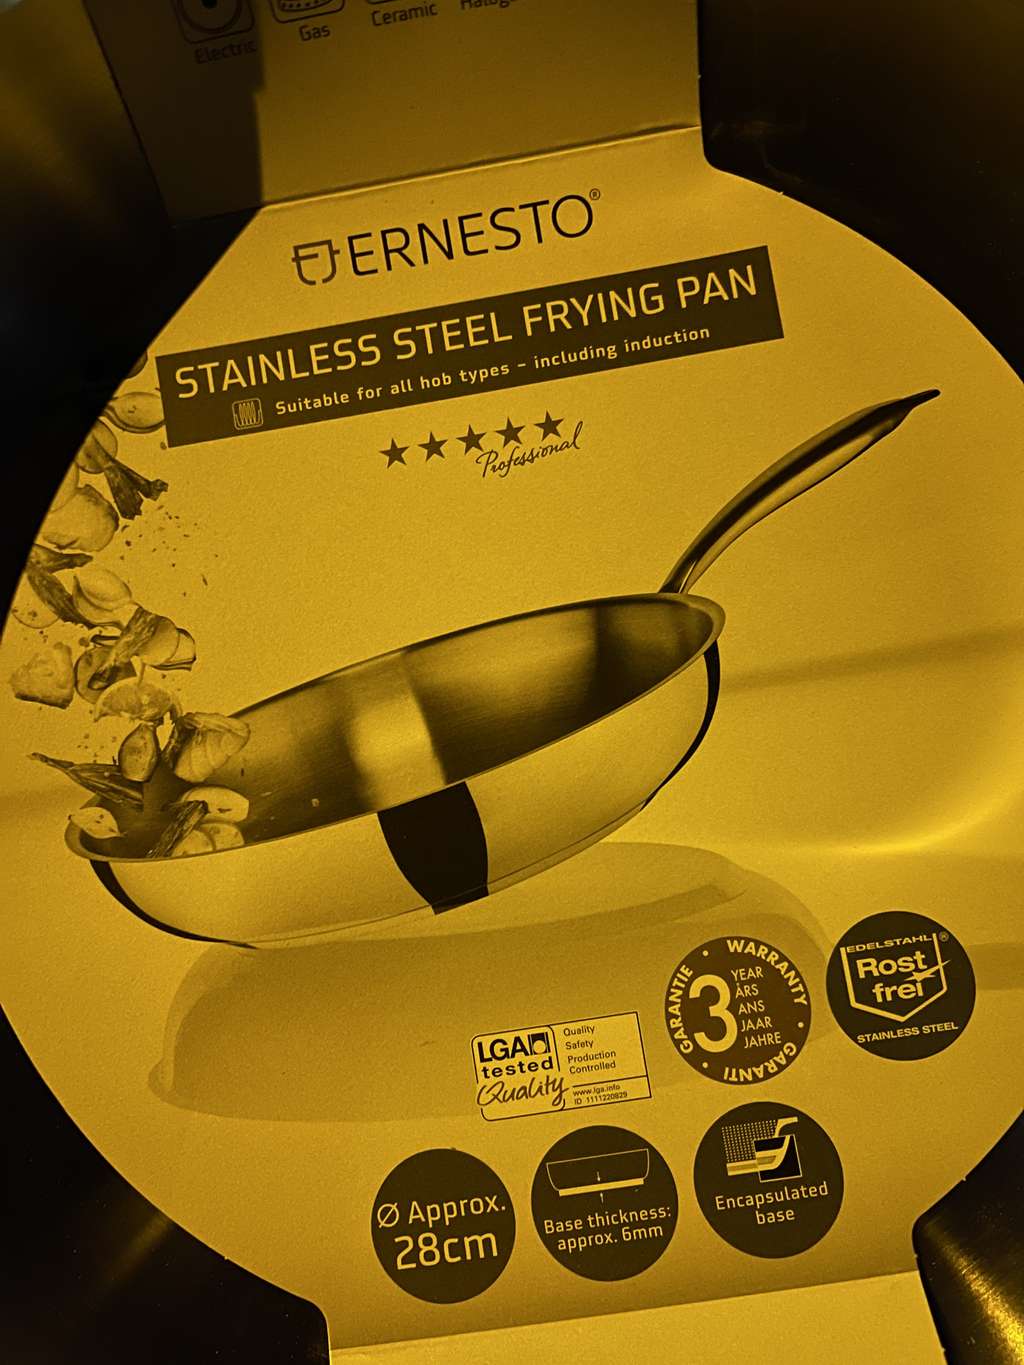 kraam Nationaal rand Ernesto pure stainless steel frying pans £11.99 at Lidl Alfreton,  Derbyshire | hotukdeals